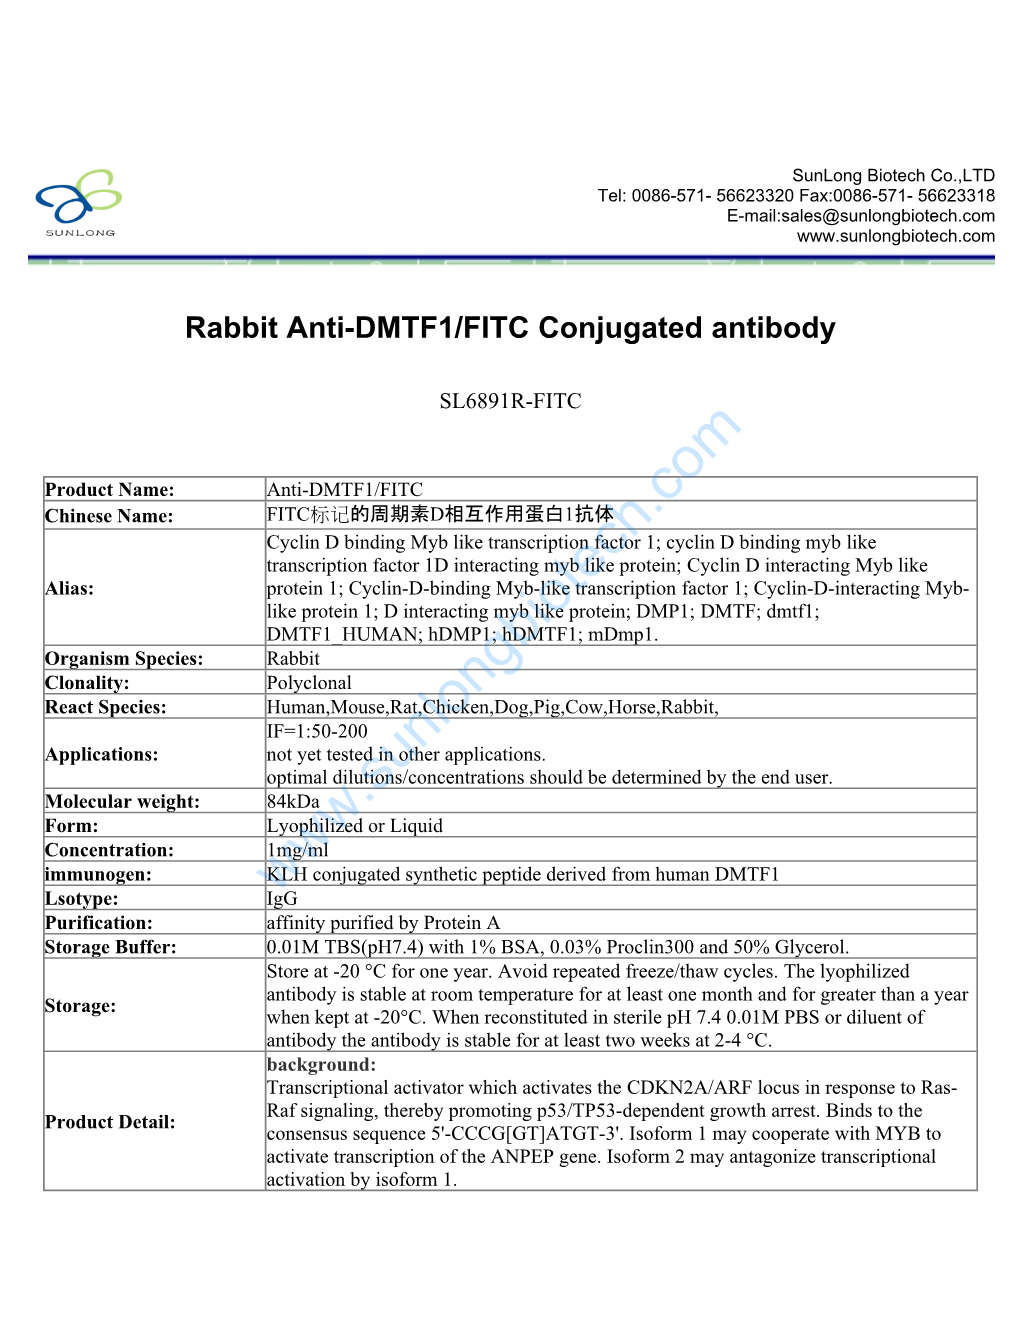 Rabbit Anti-DMTF1/FITC Conjugated Antibody-SL6891R-FITC